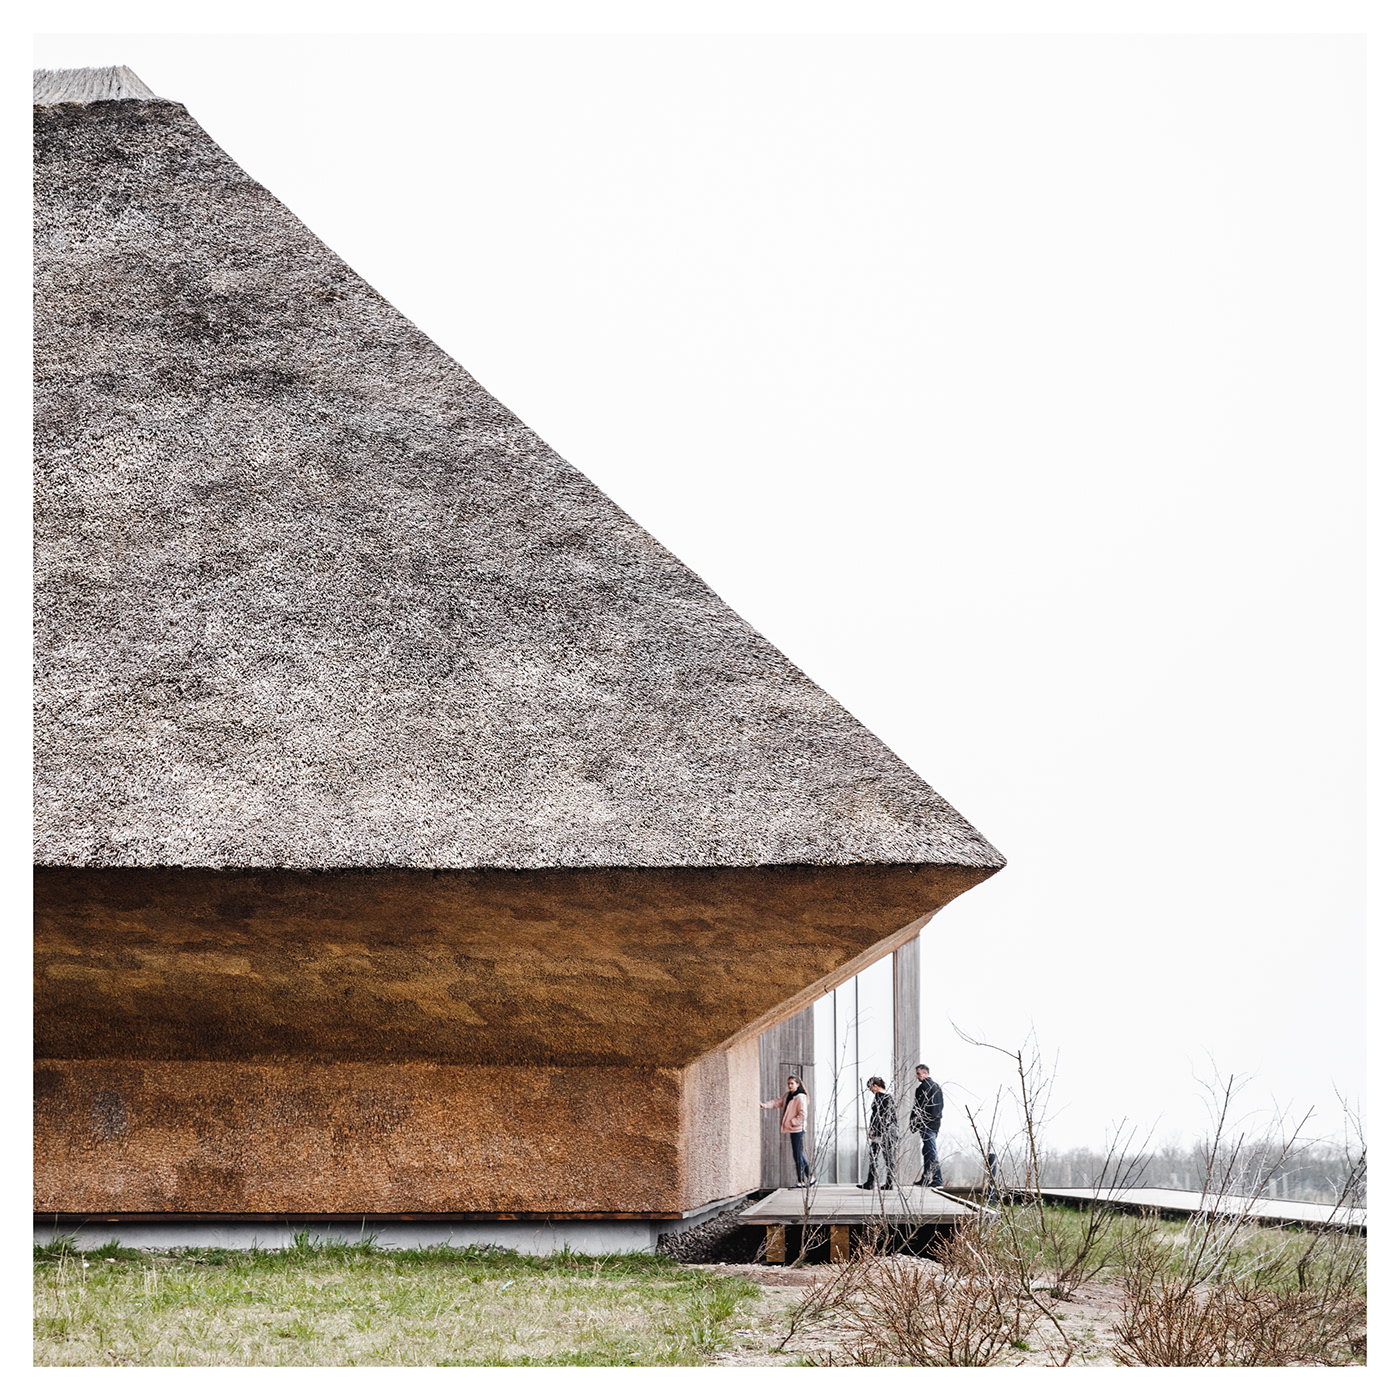 museum Scandinavia Landscape wildlife straw design denmark roof traditional